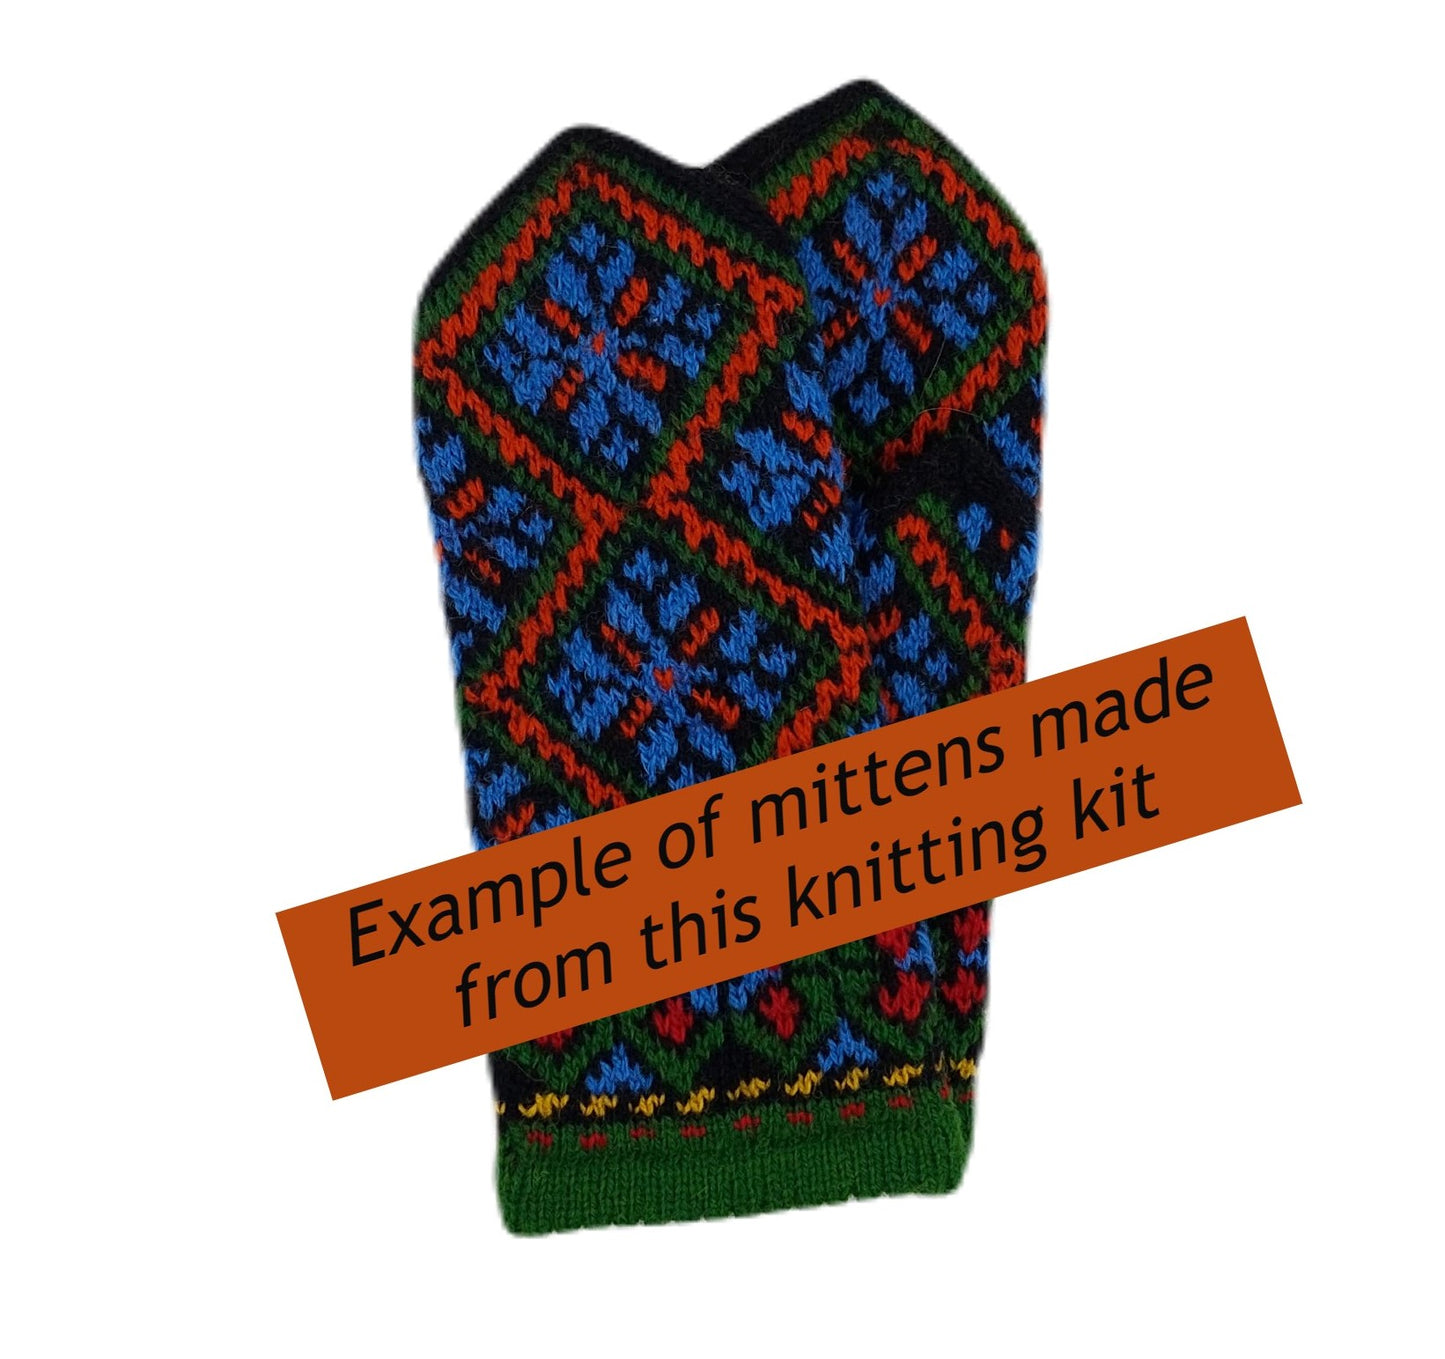 Knitting kit "Kurzeme 4"